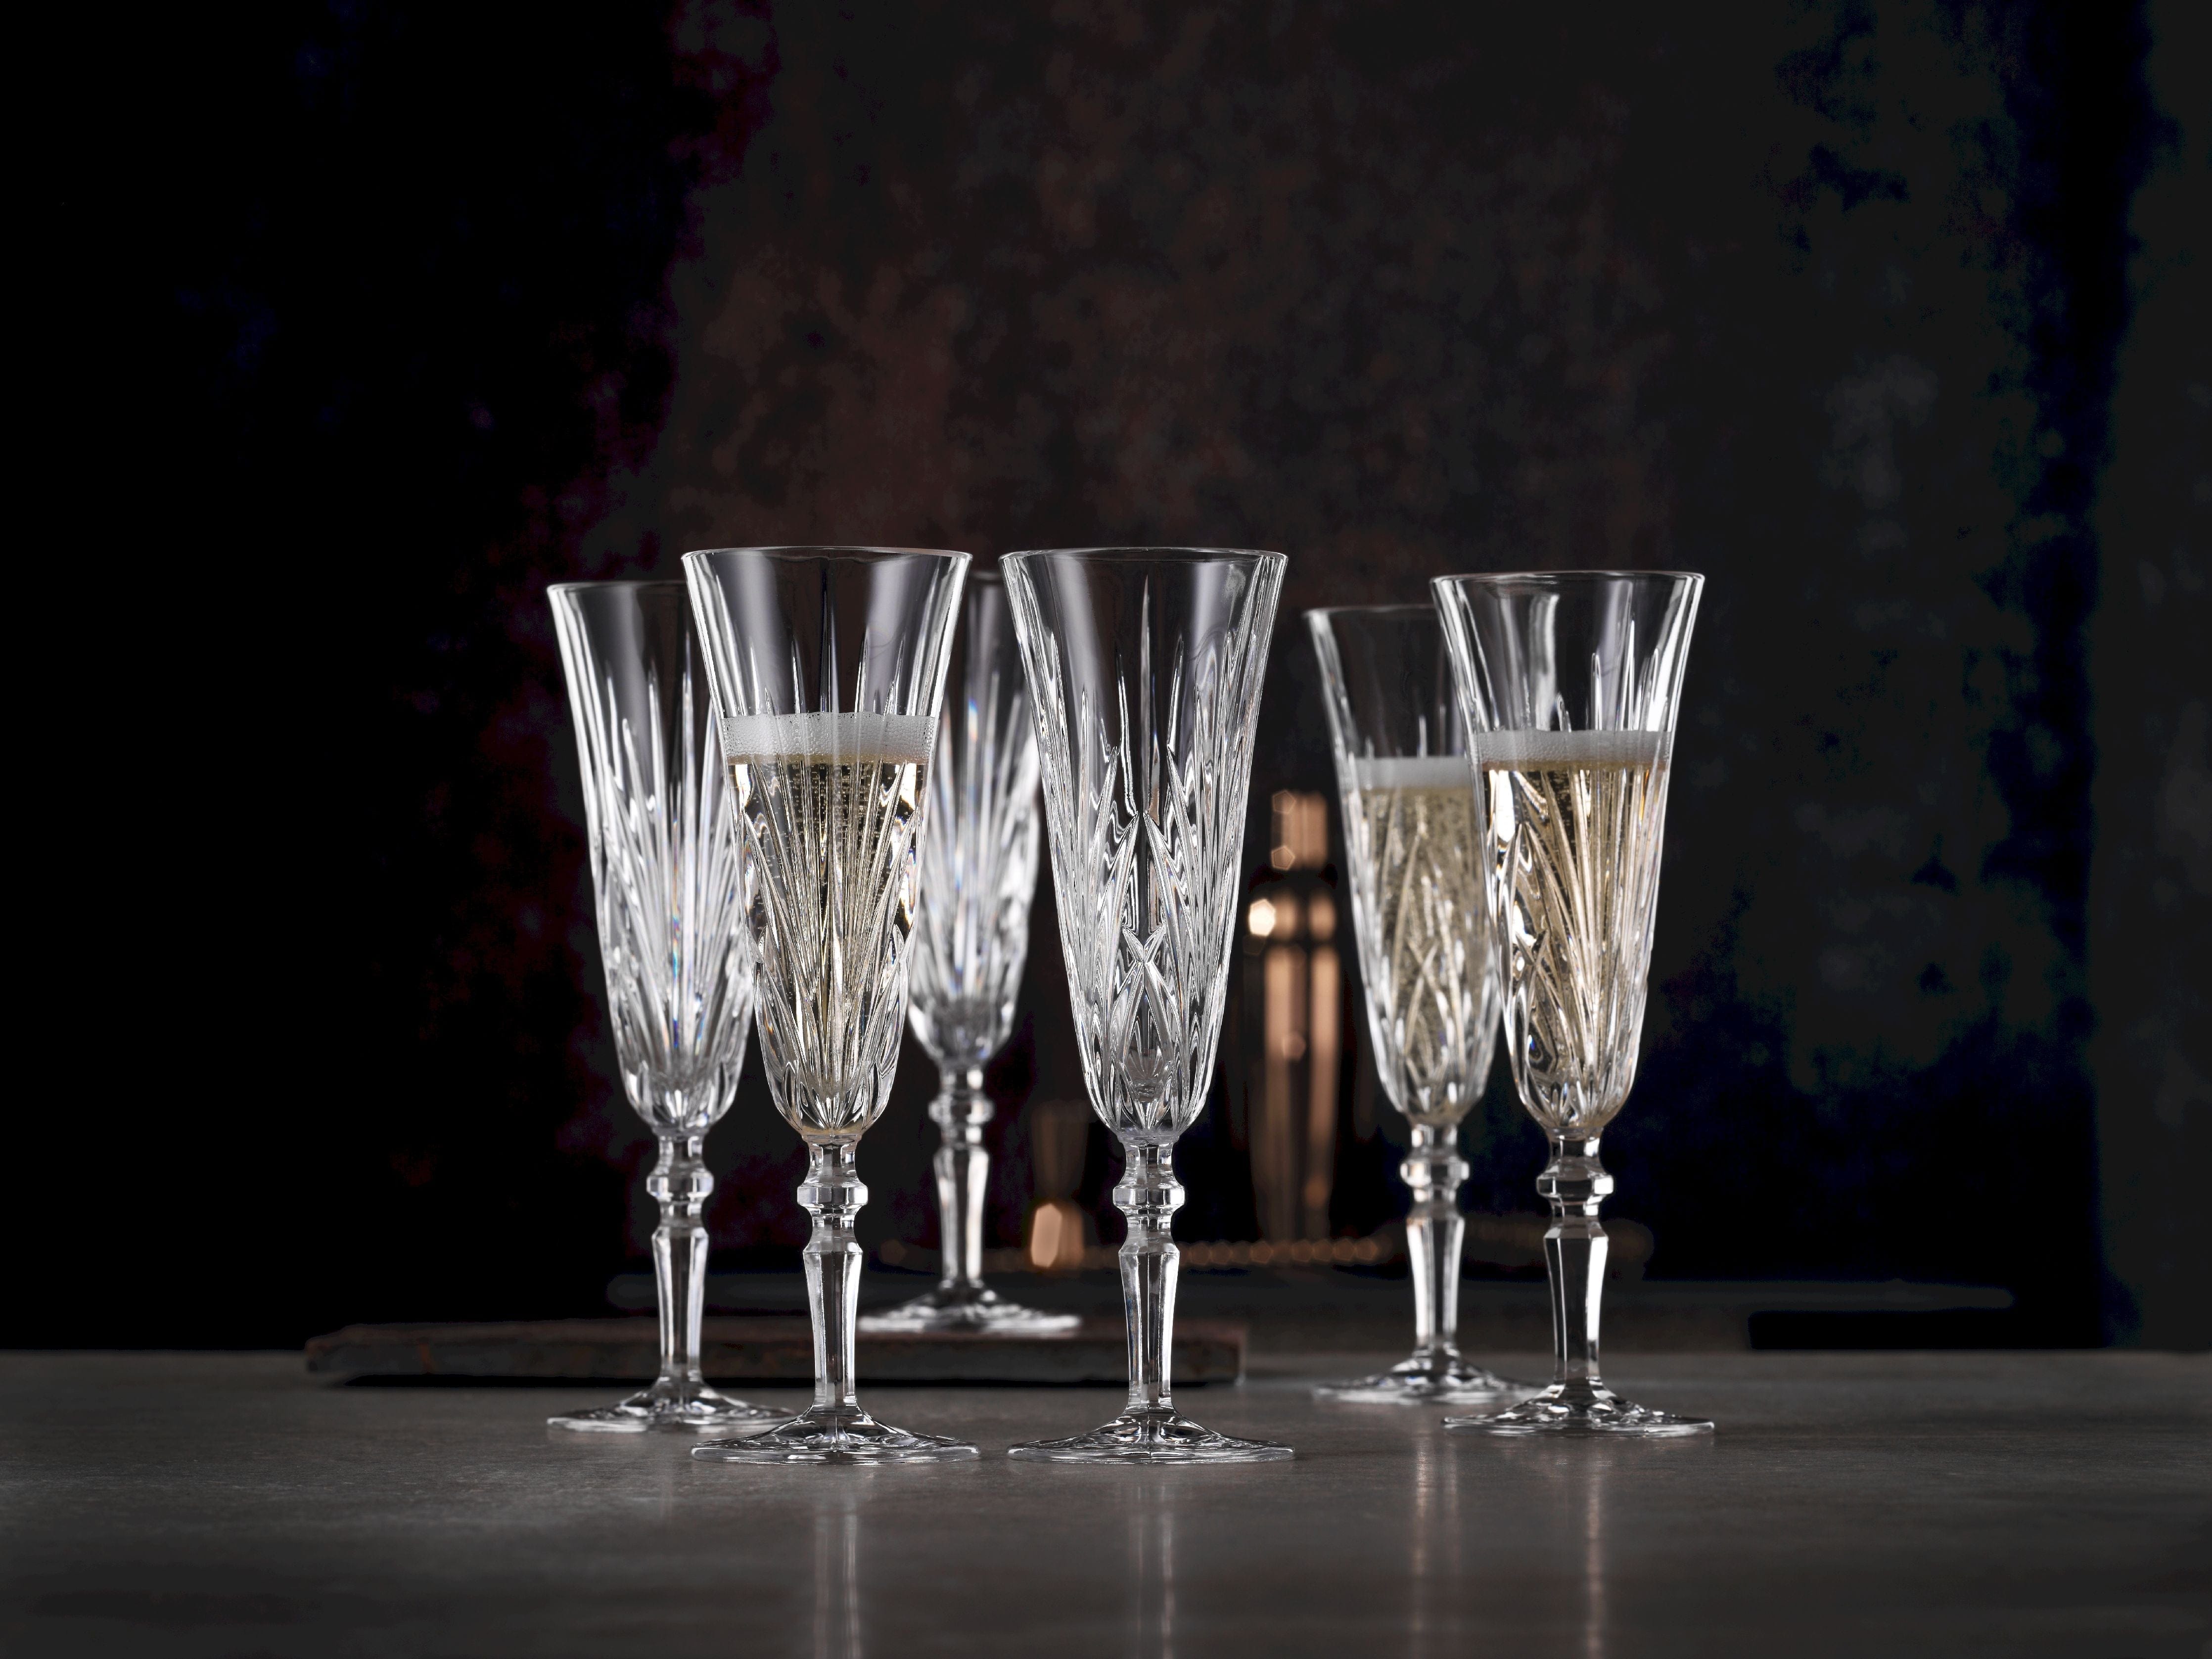 Nachtmann Palais Champagne Glass 140 ml, 6 st.